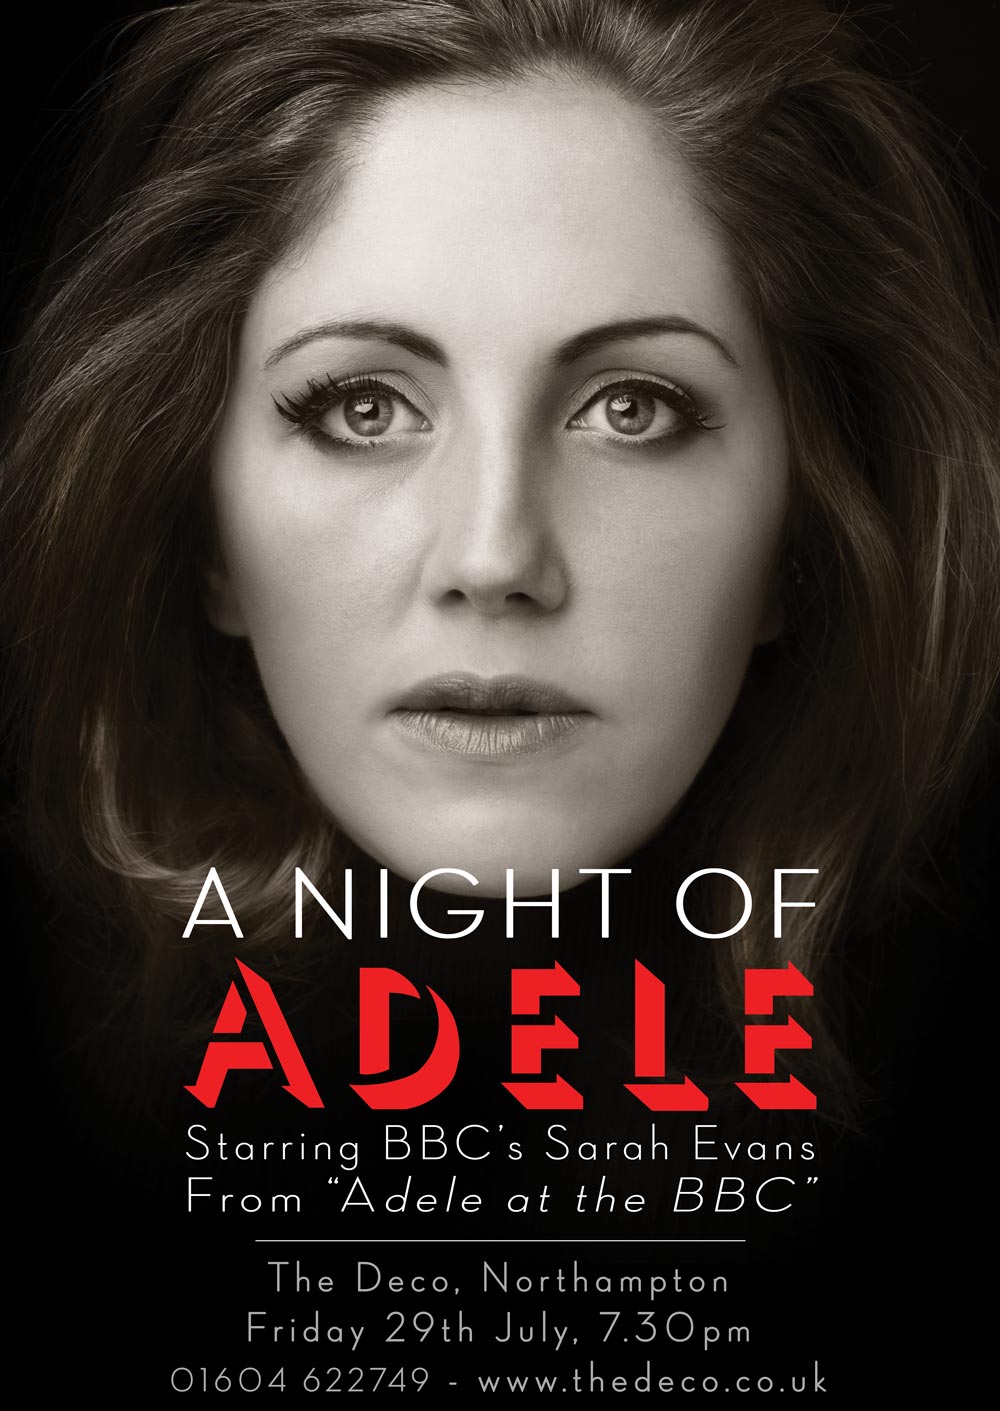 A night of Adele